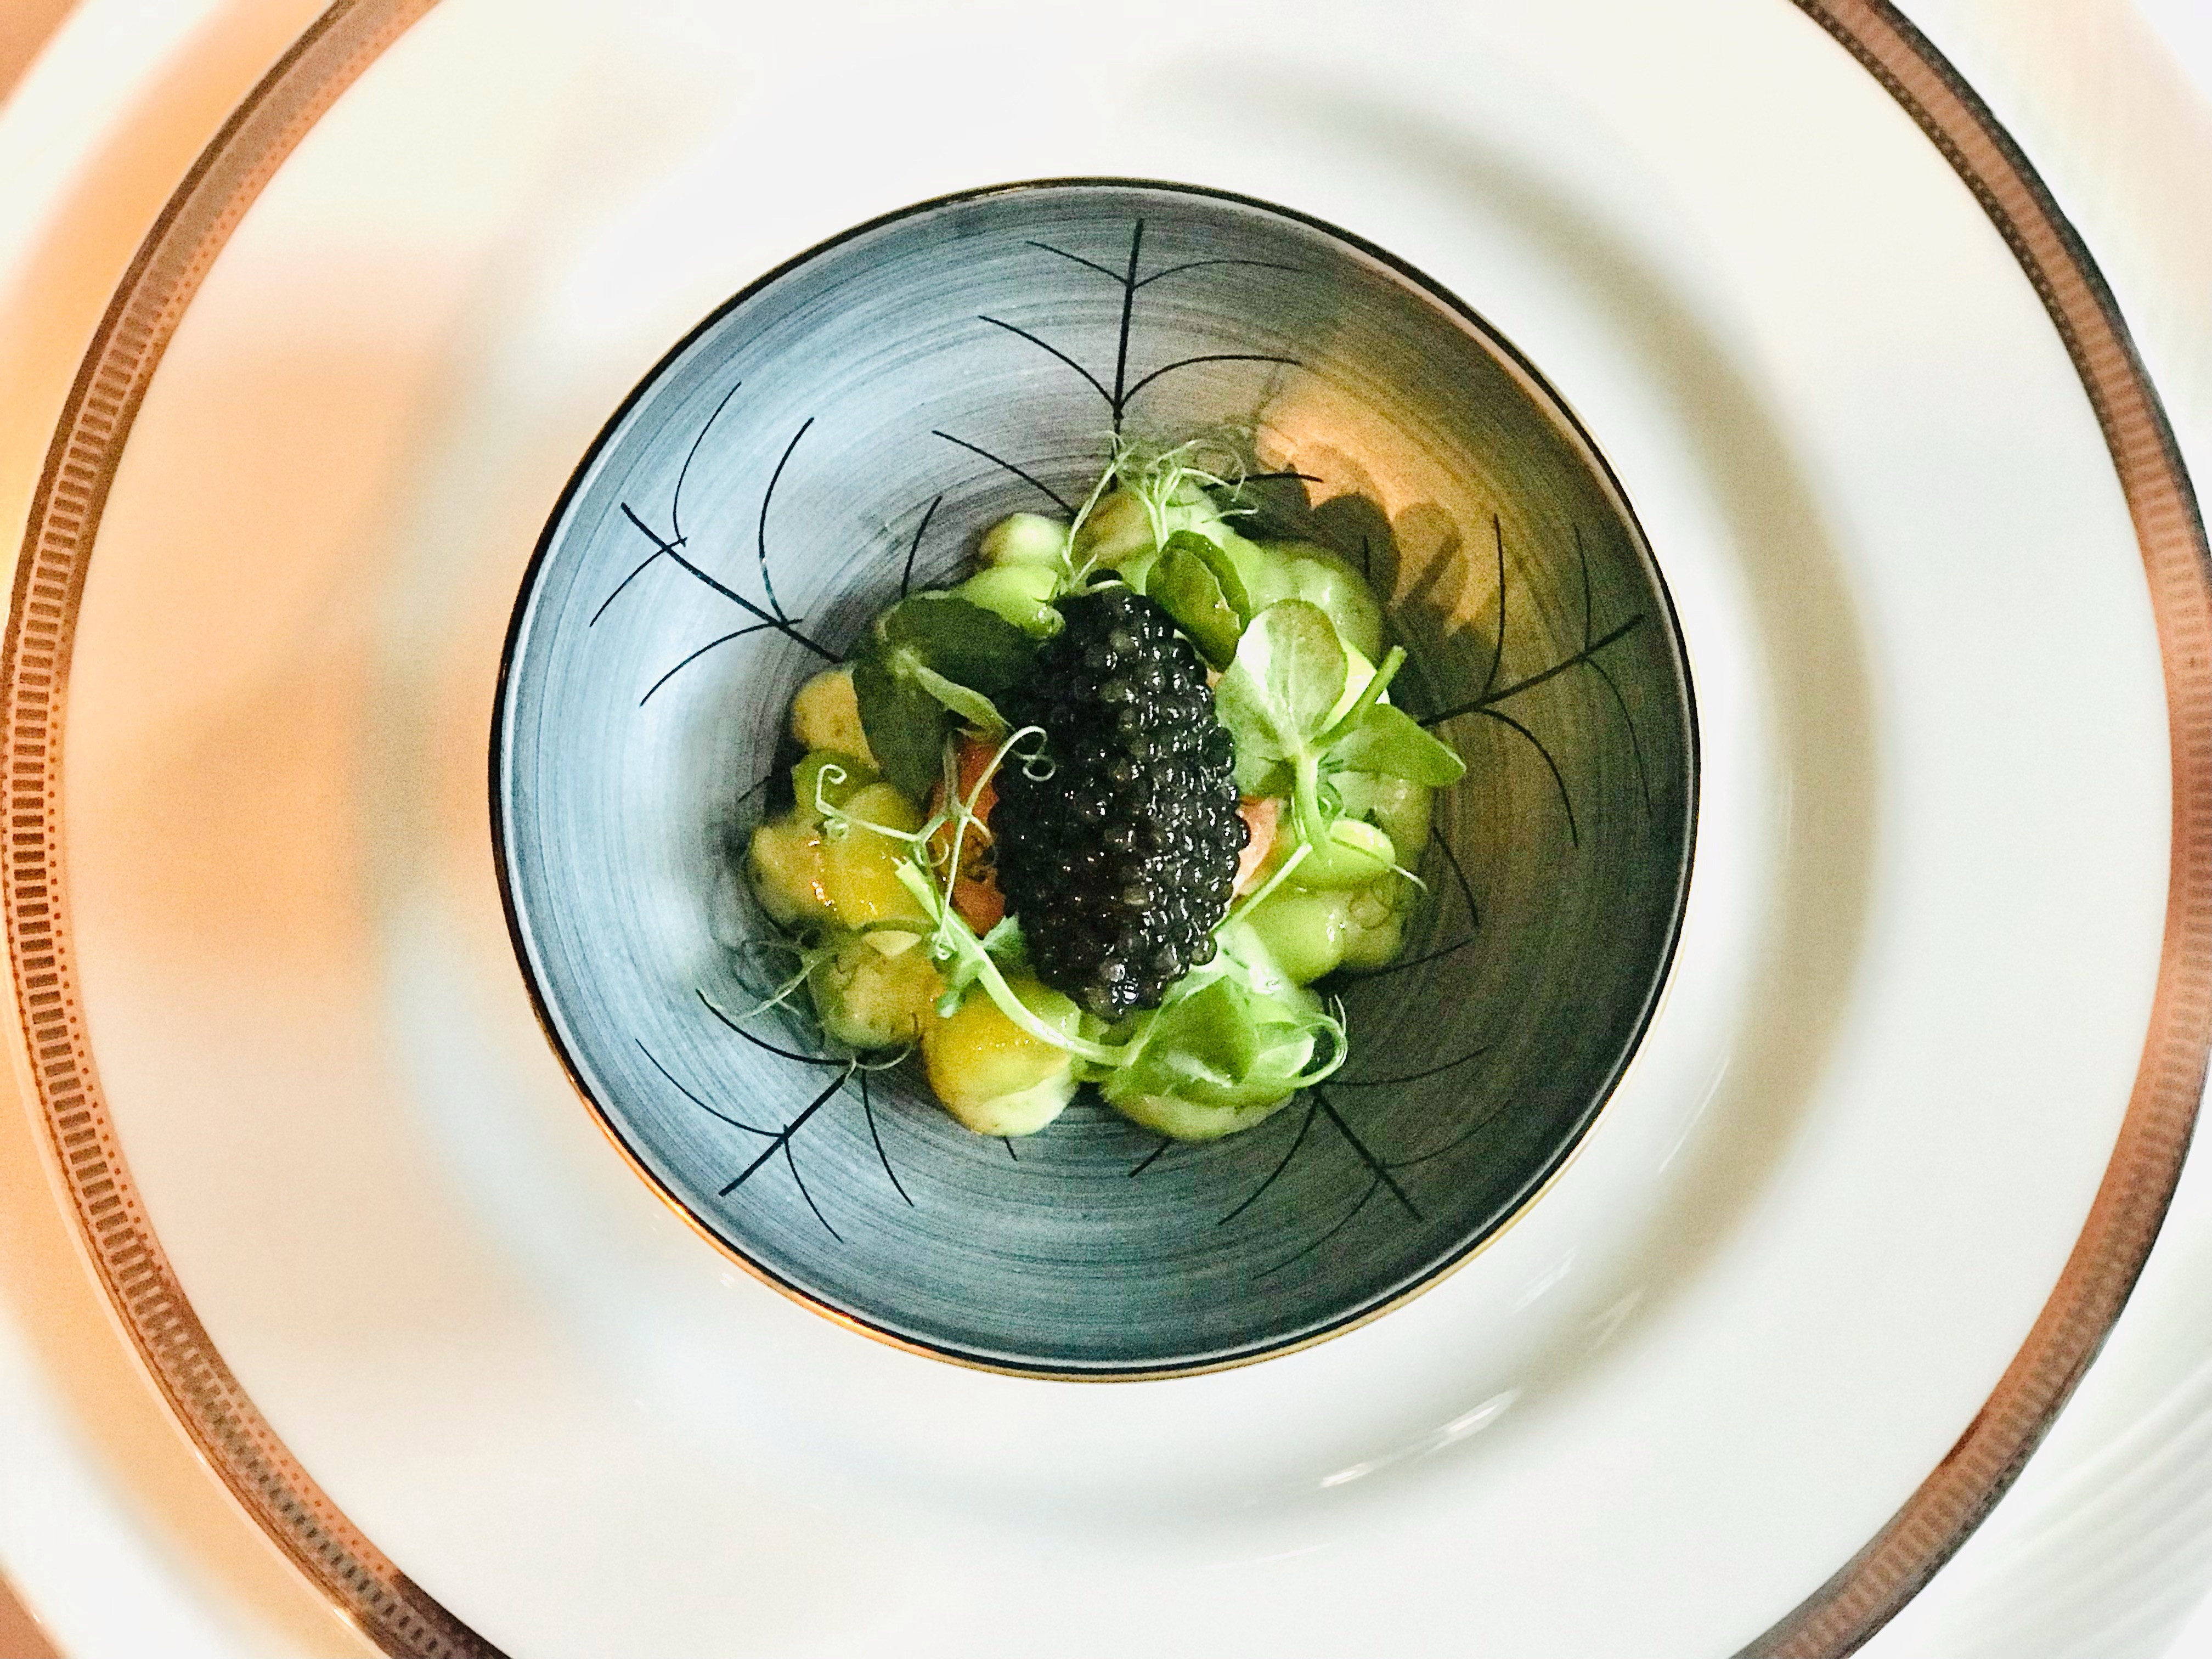 sake slmon caviar.jpeg